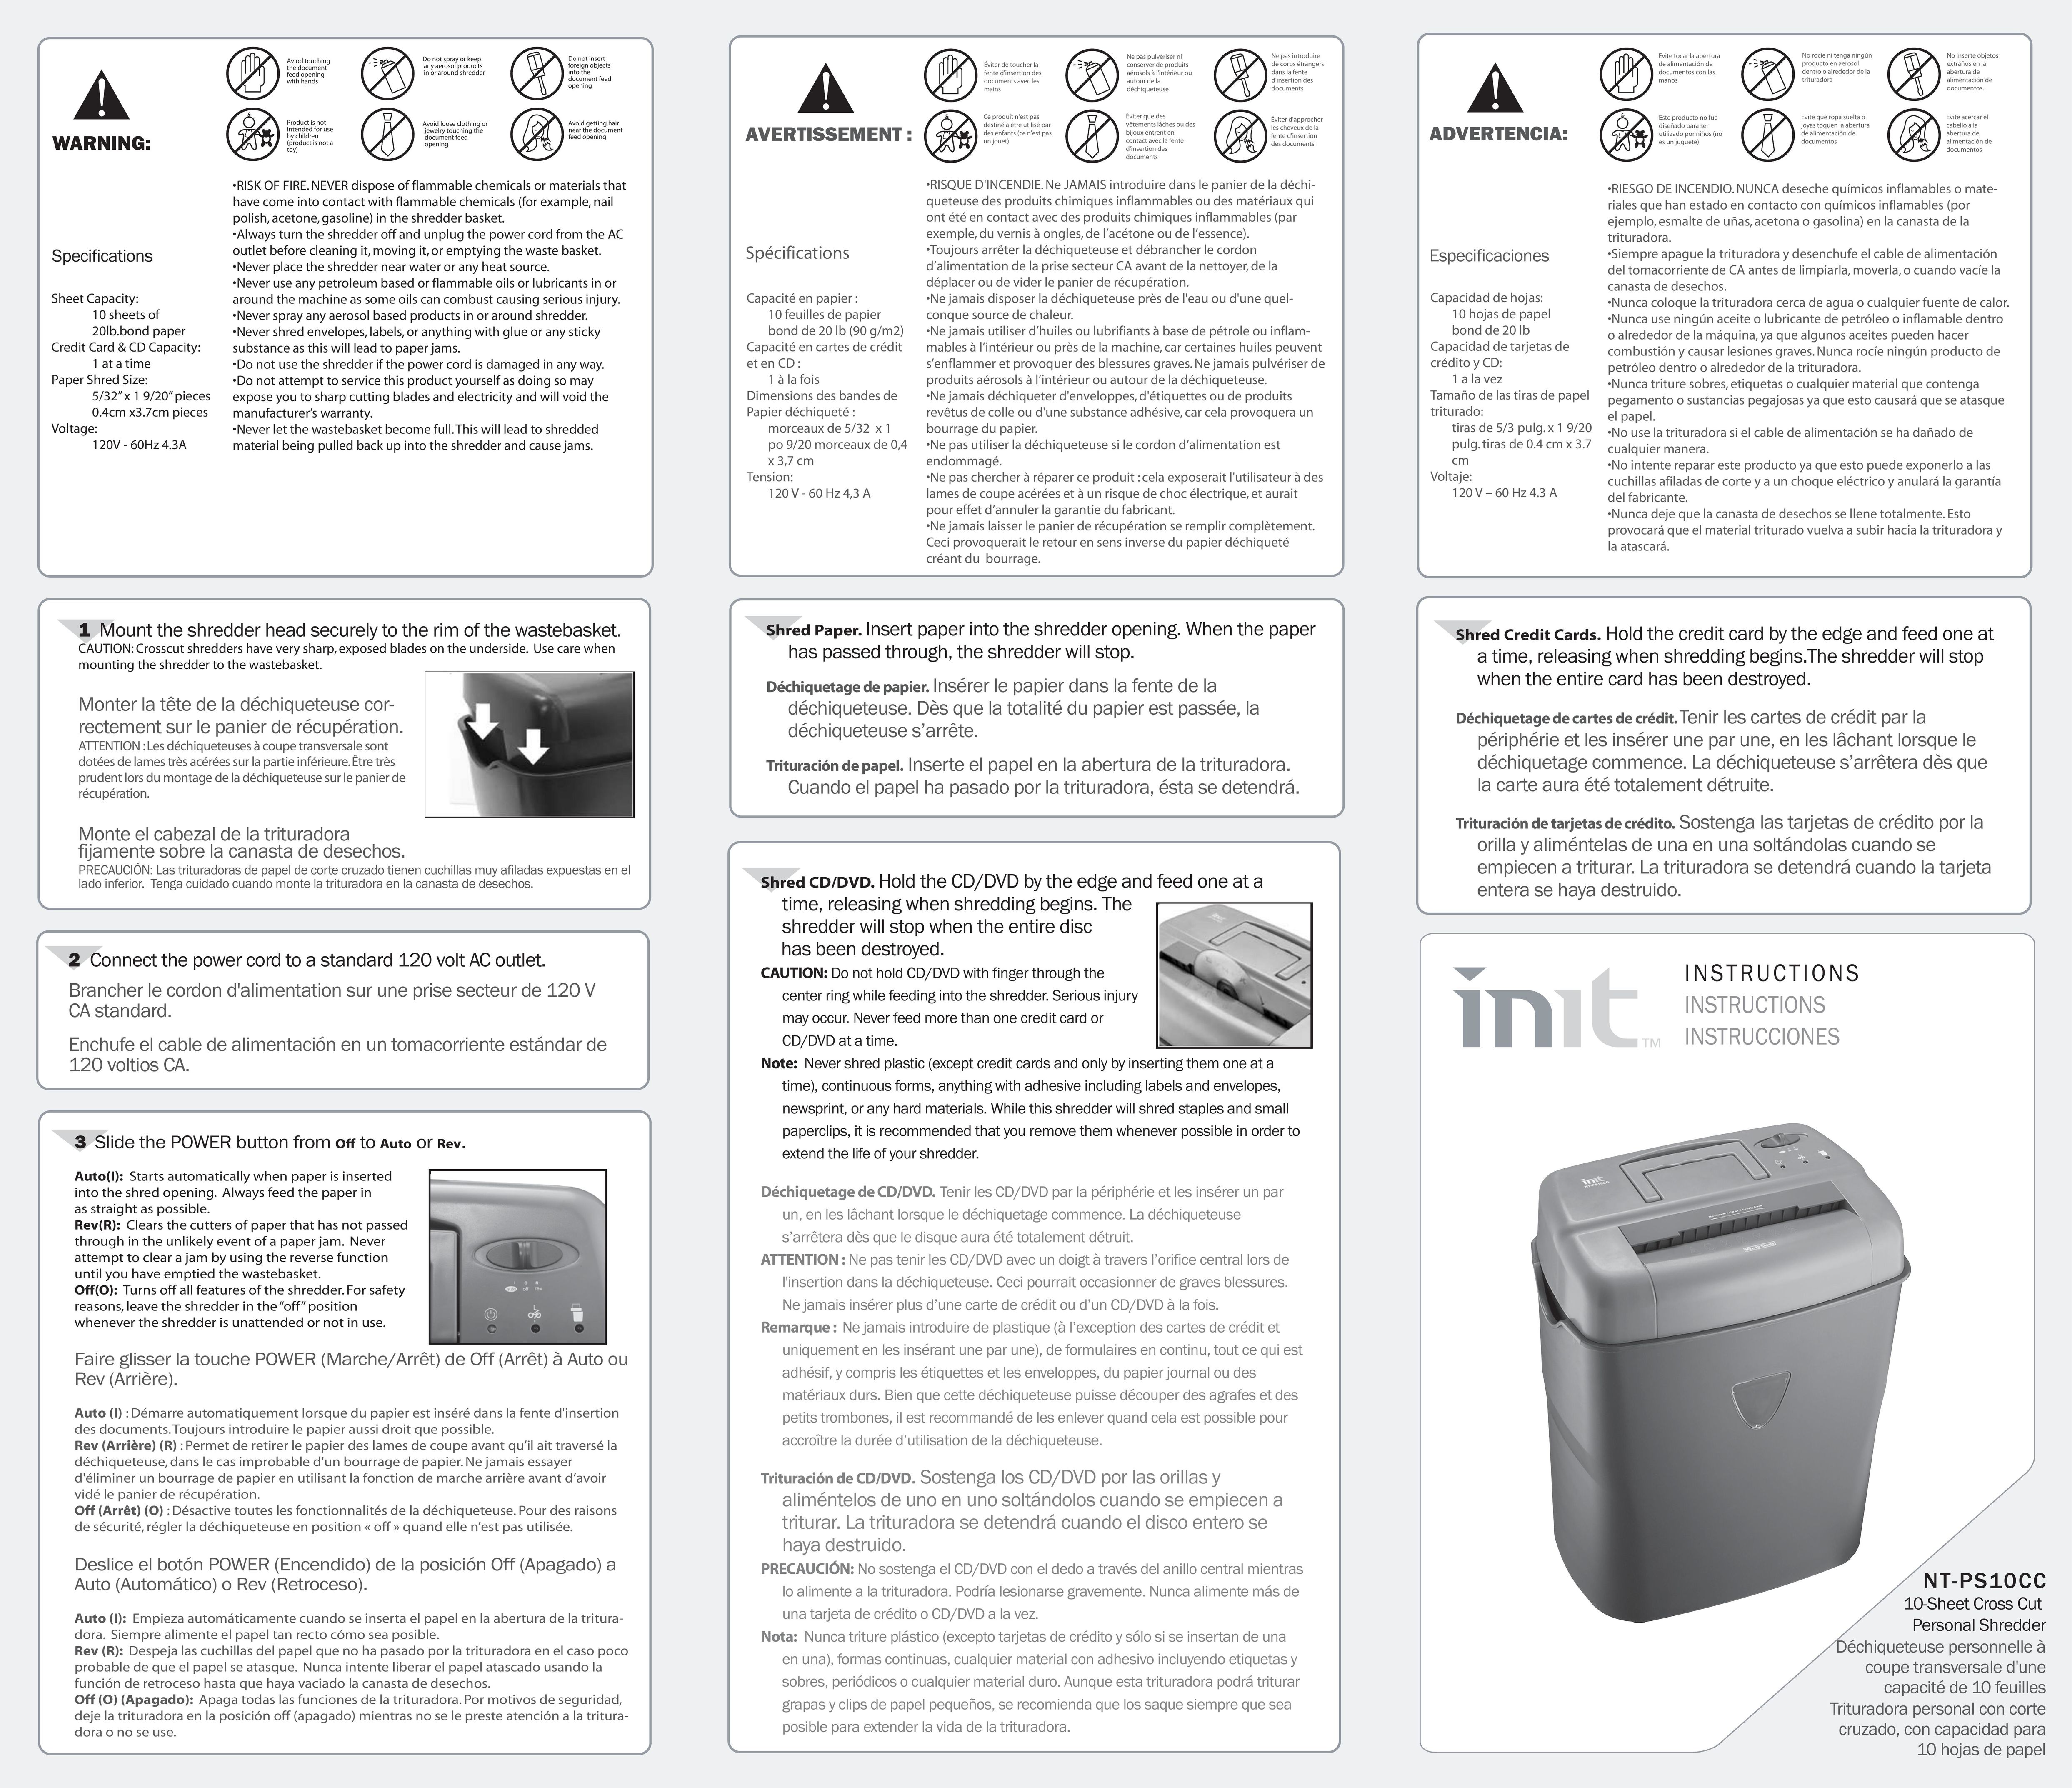 Init NT-PS10CC Paper Shredder User Manual